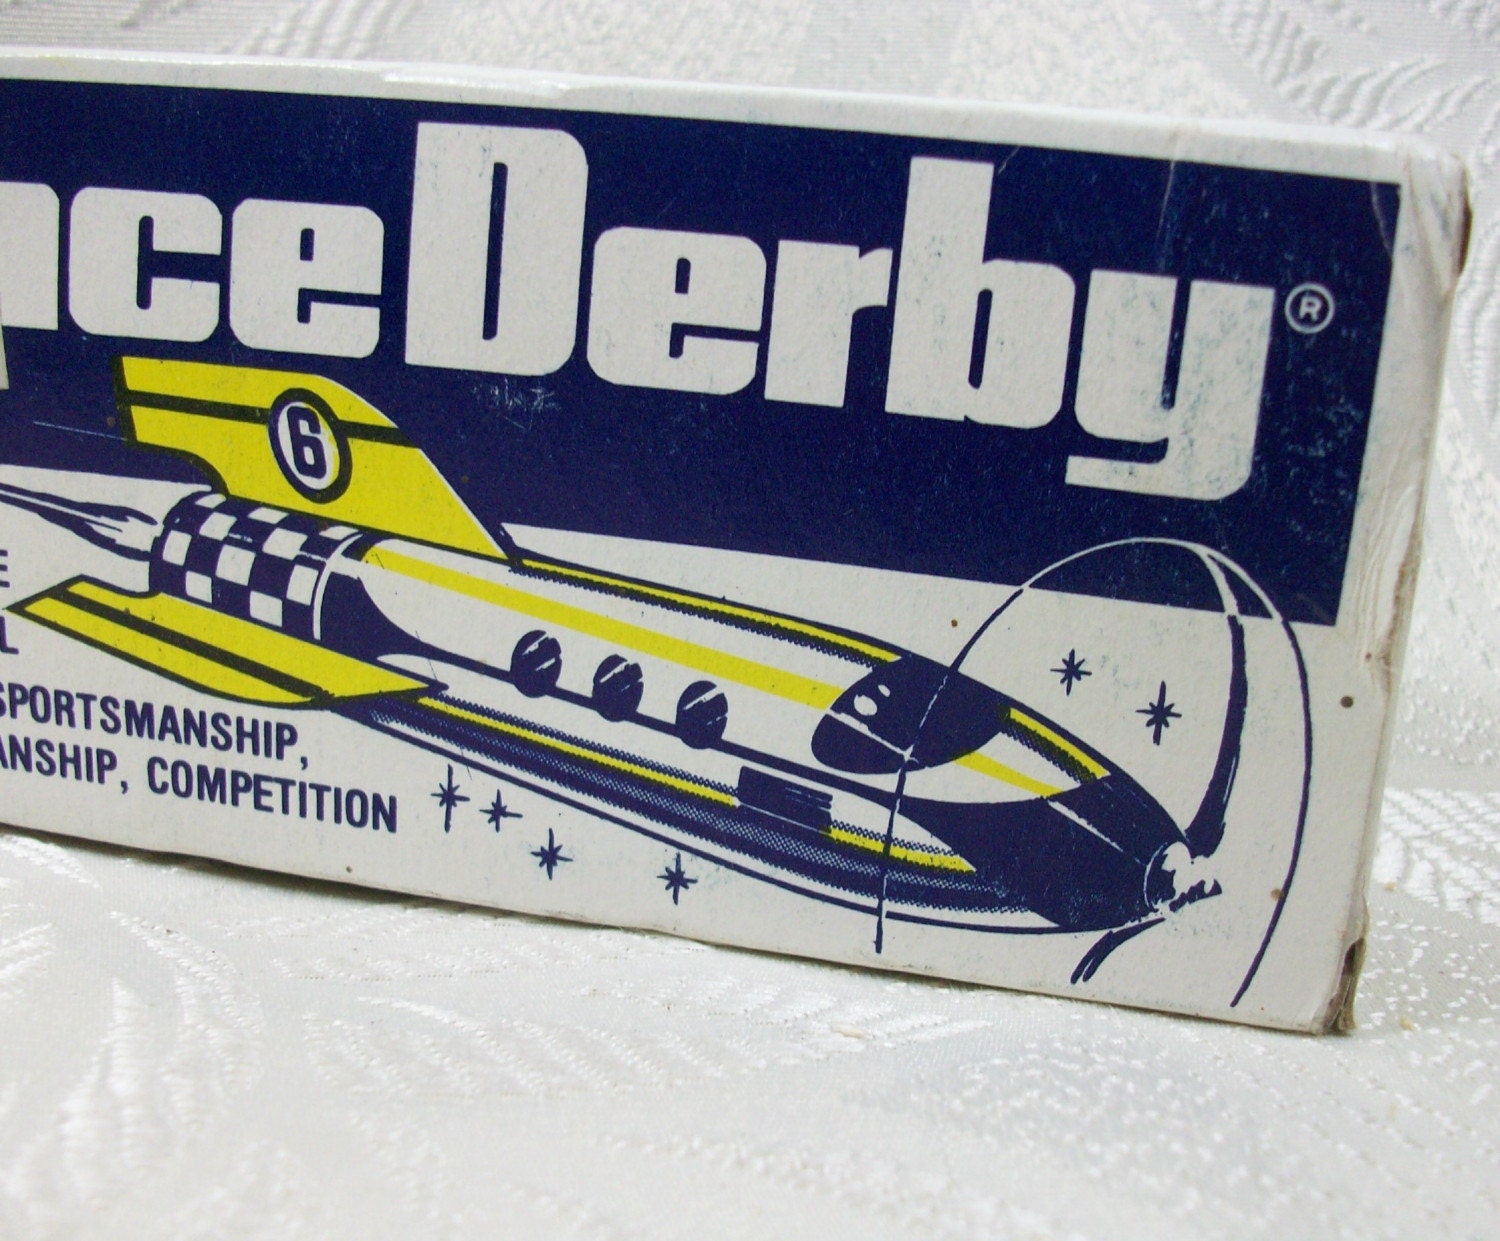 space derby clip art - photo #26